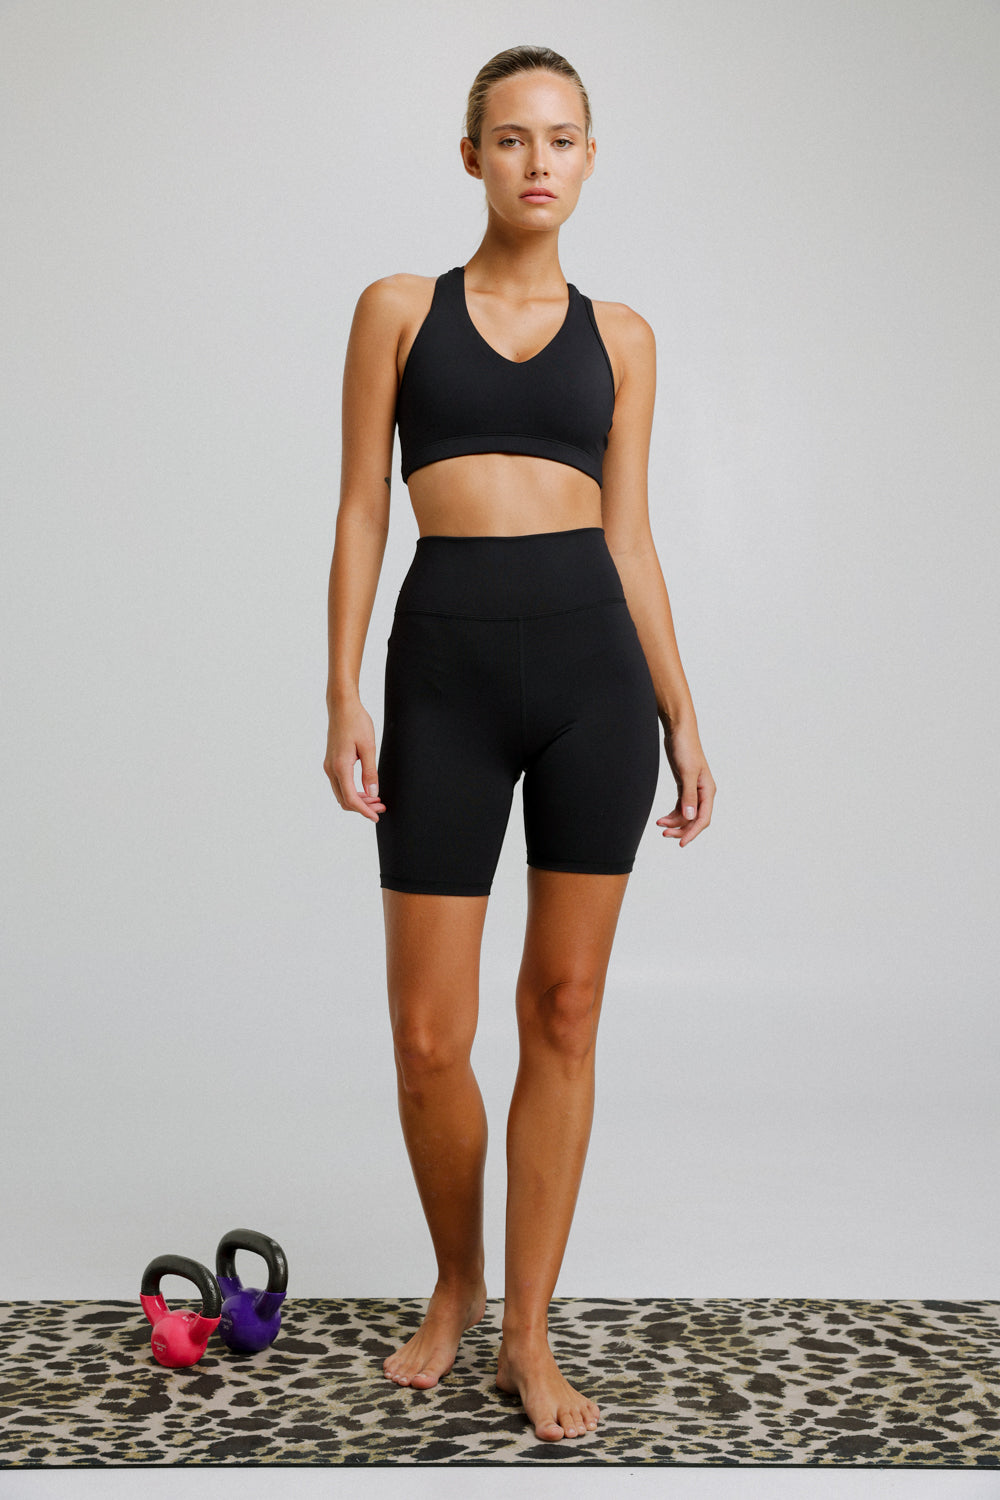 Jupiter Short Black Leggings מכנס קצר בצבע שחור לאימון יוגה / ריצה / התעמלות / כושר 